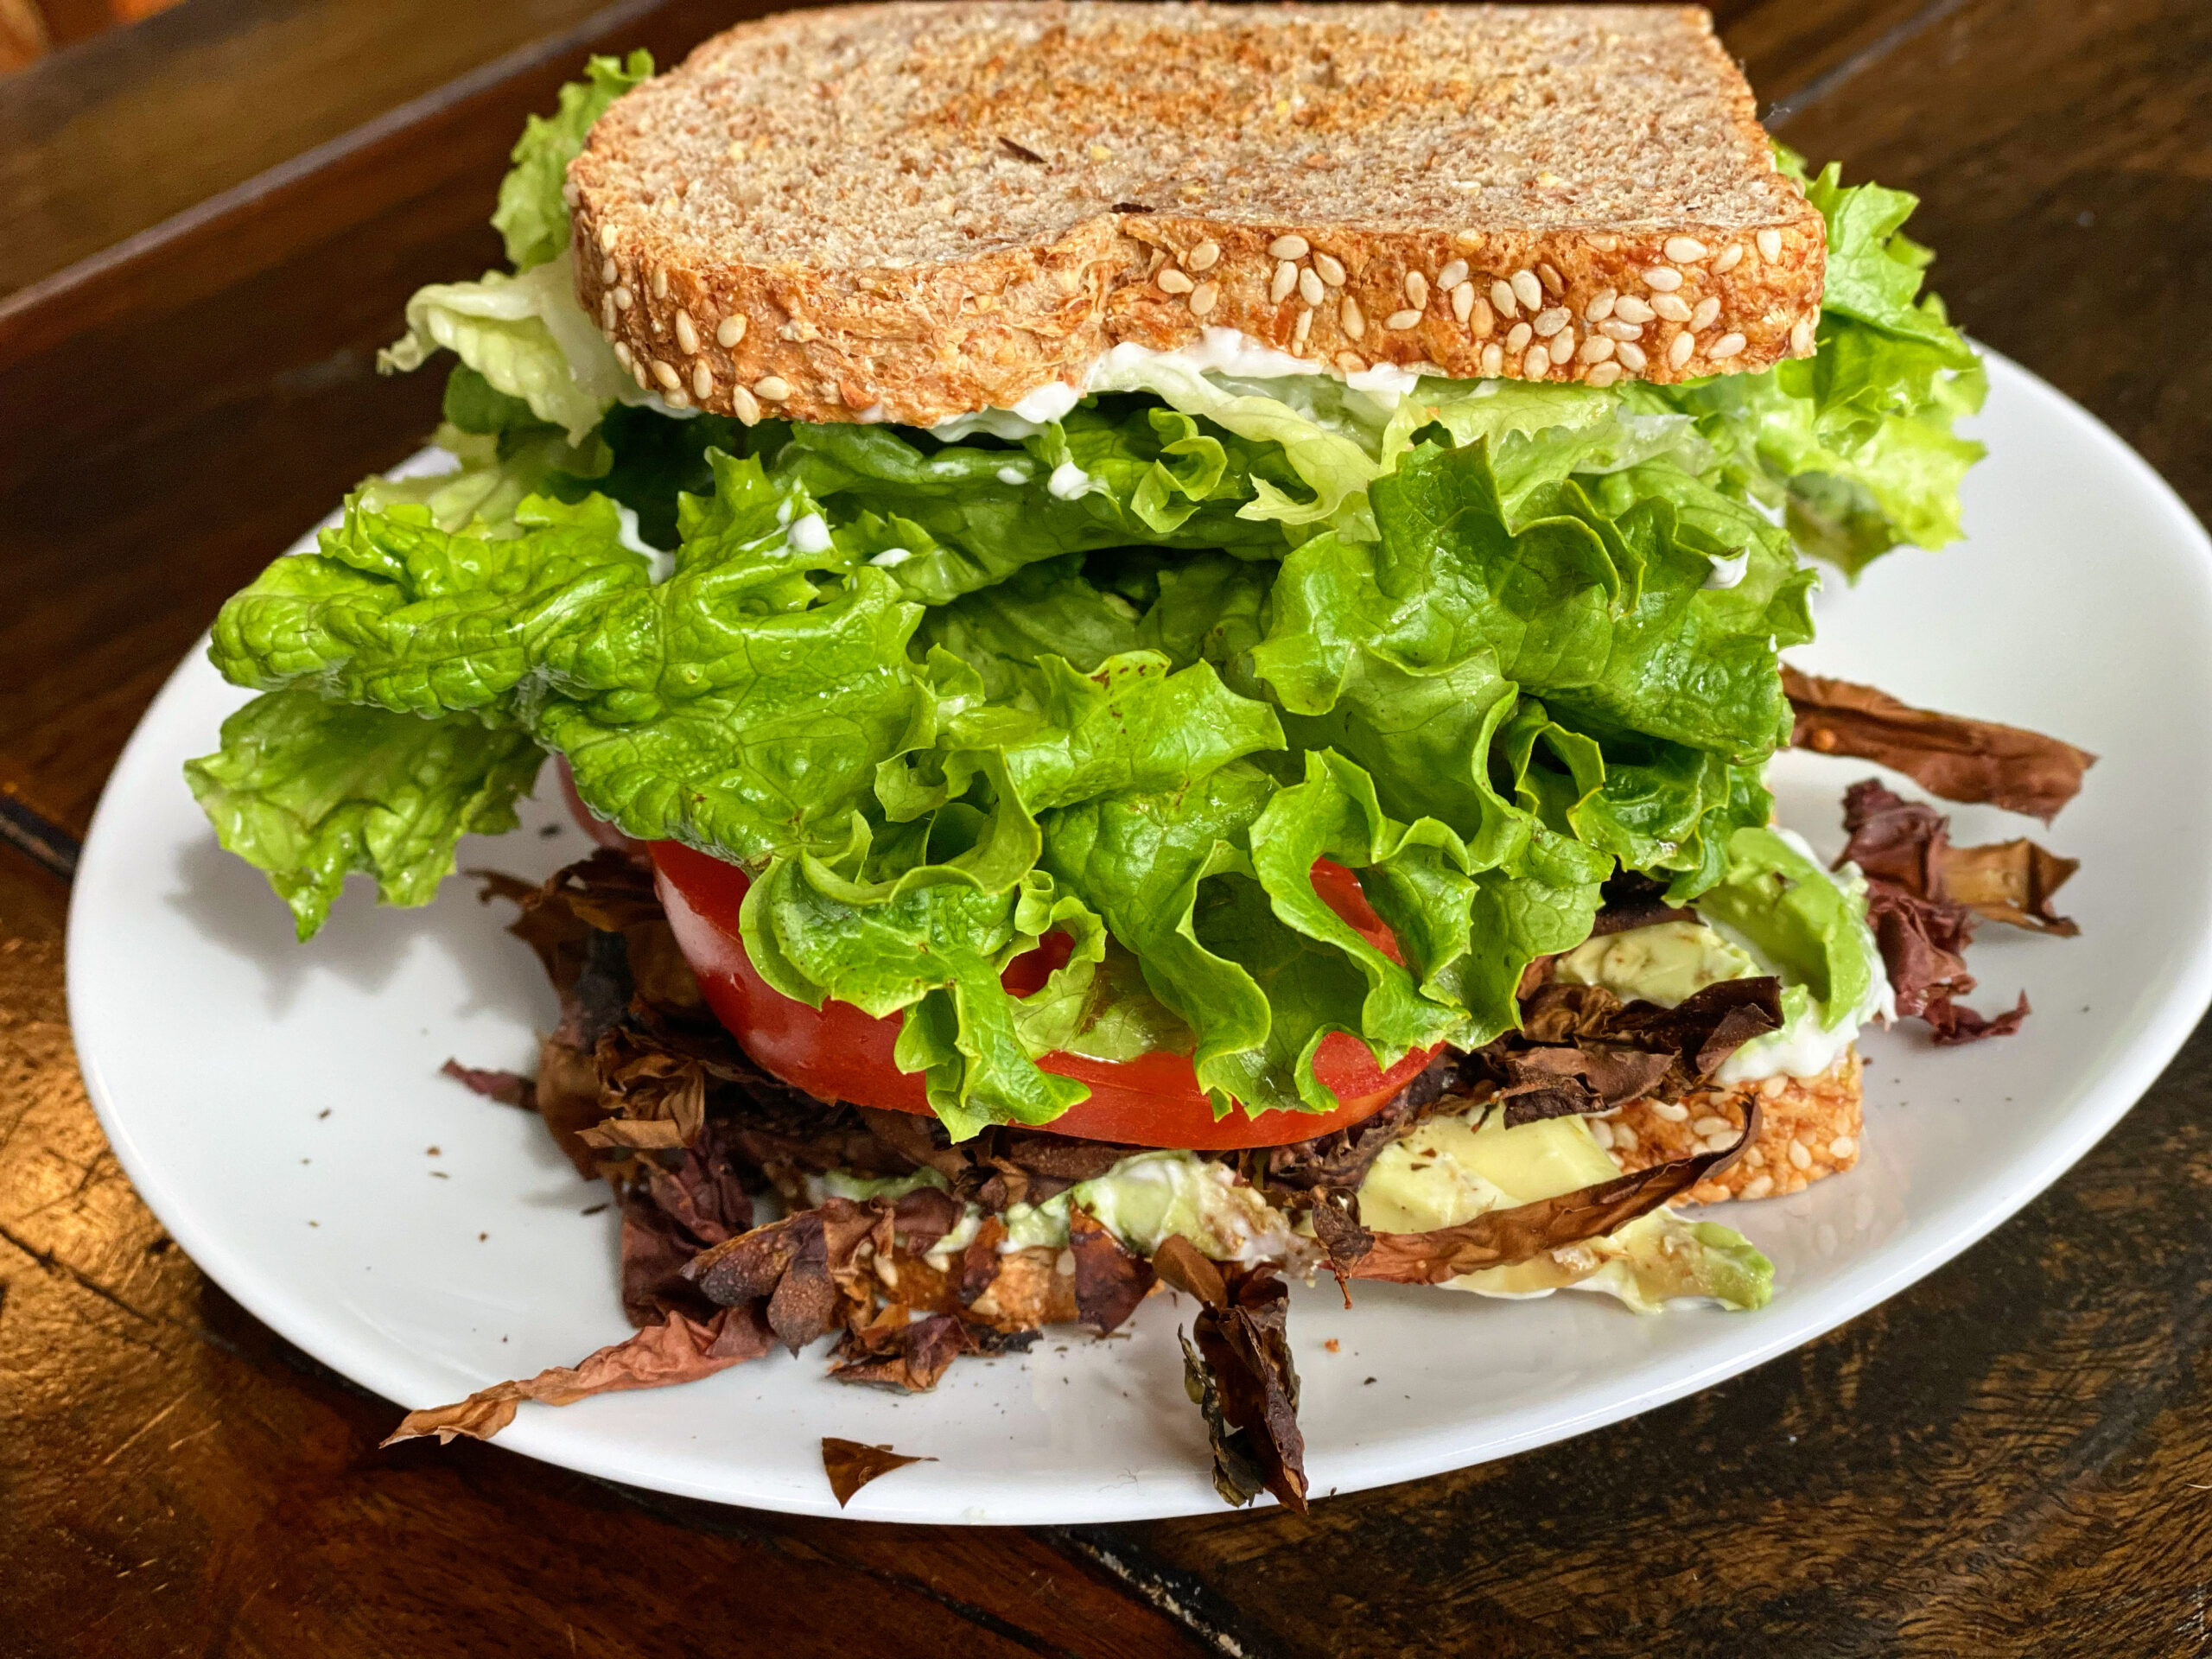 Featured image for “DTLA Sandwich”